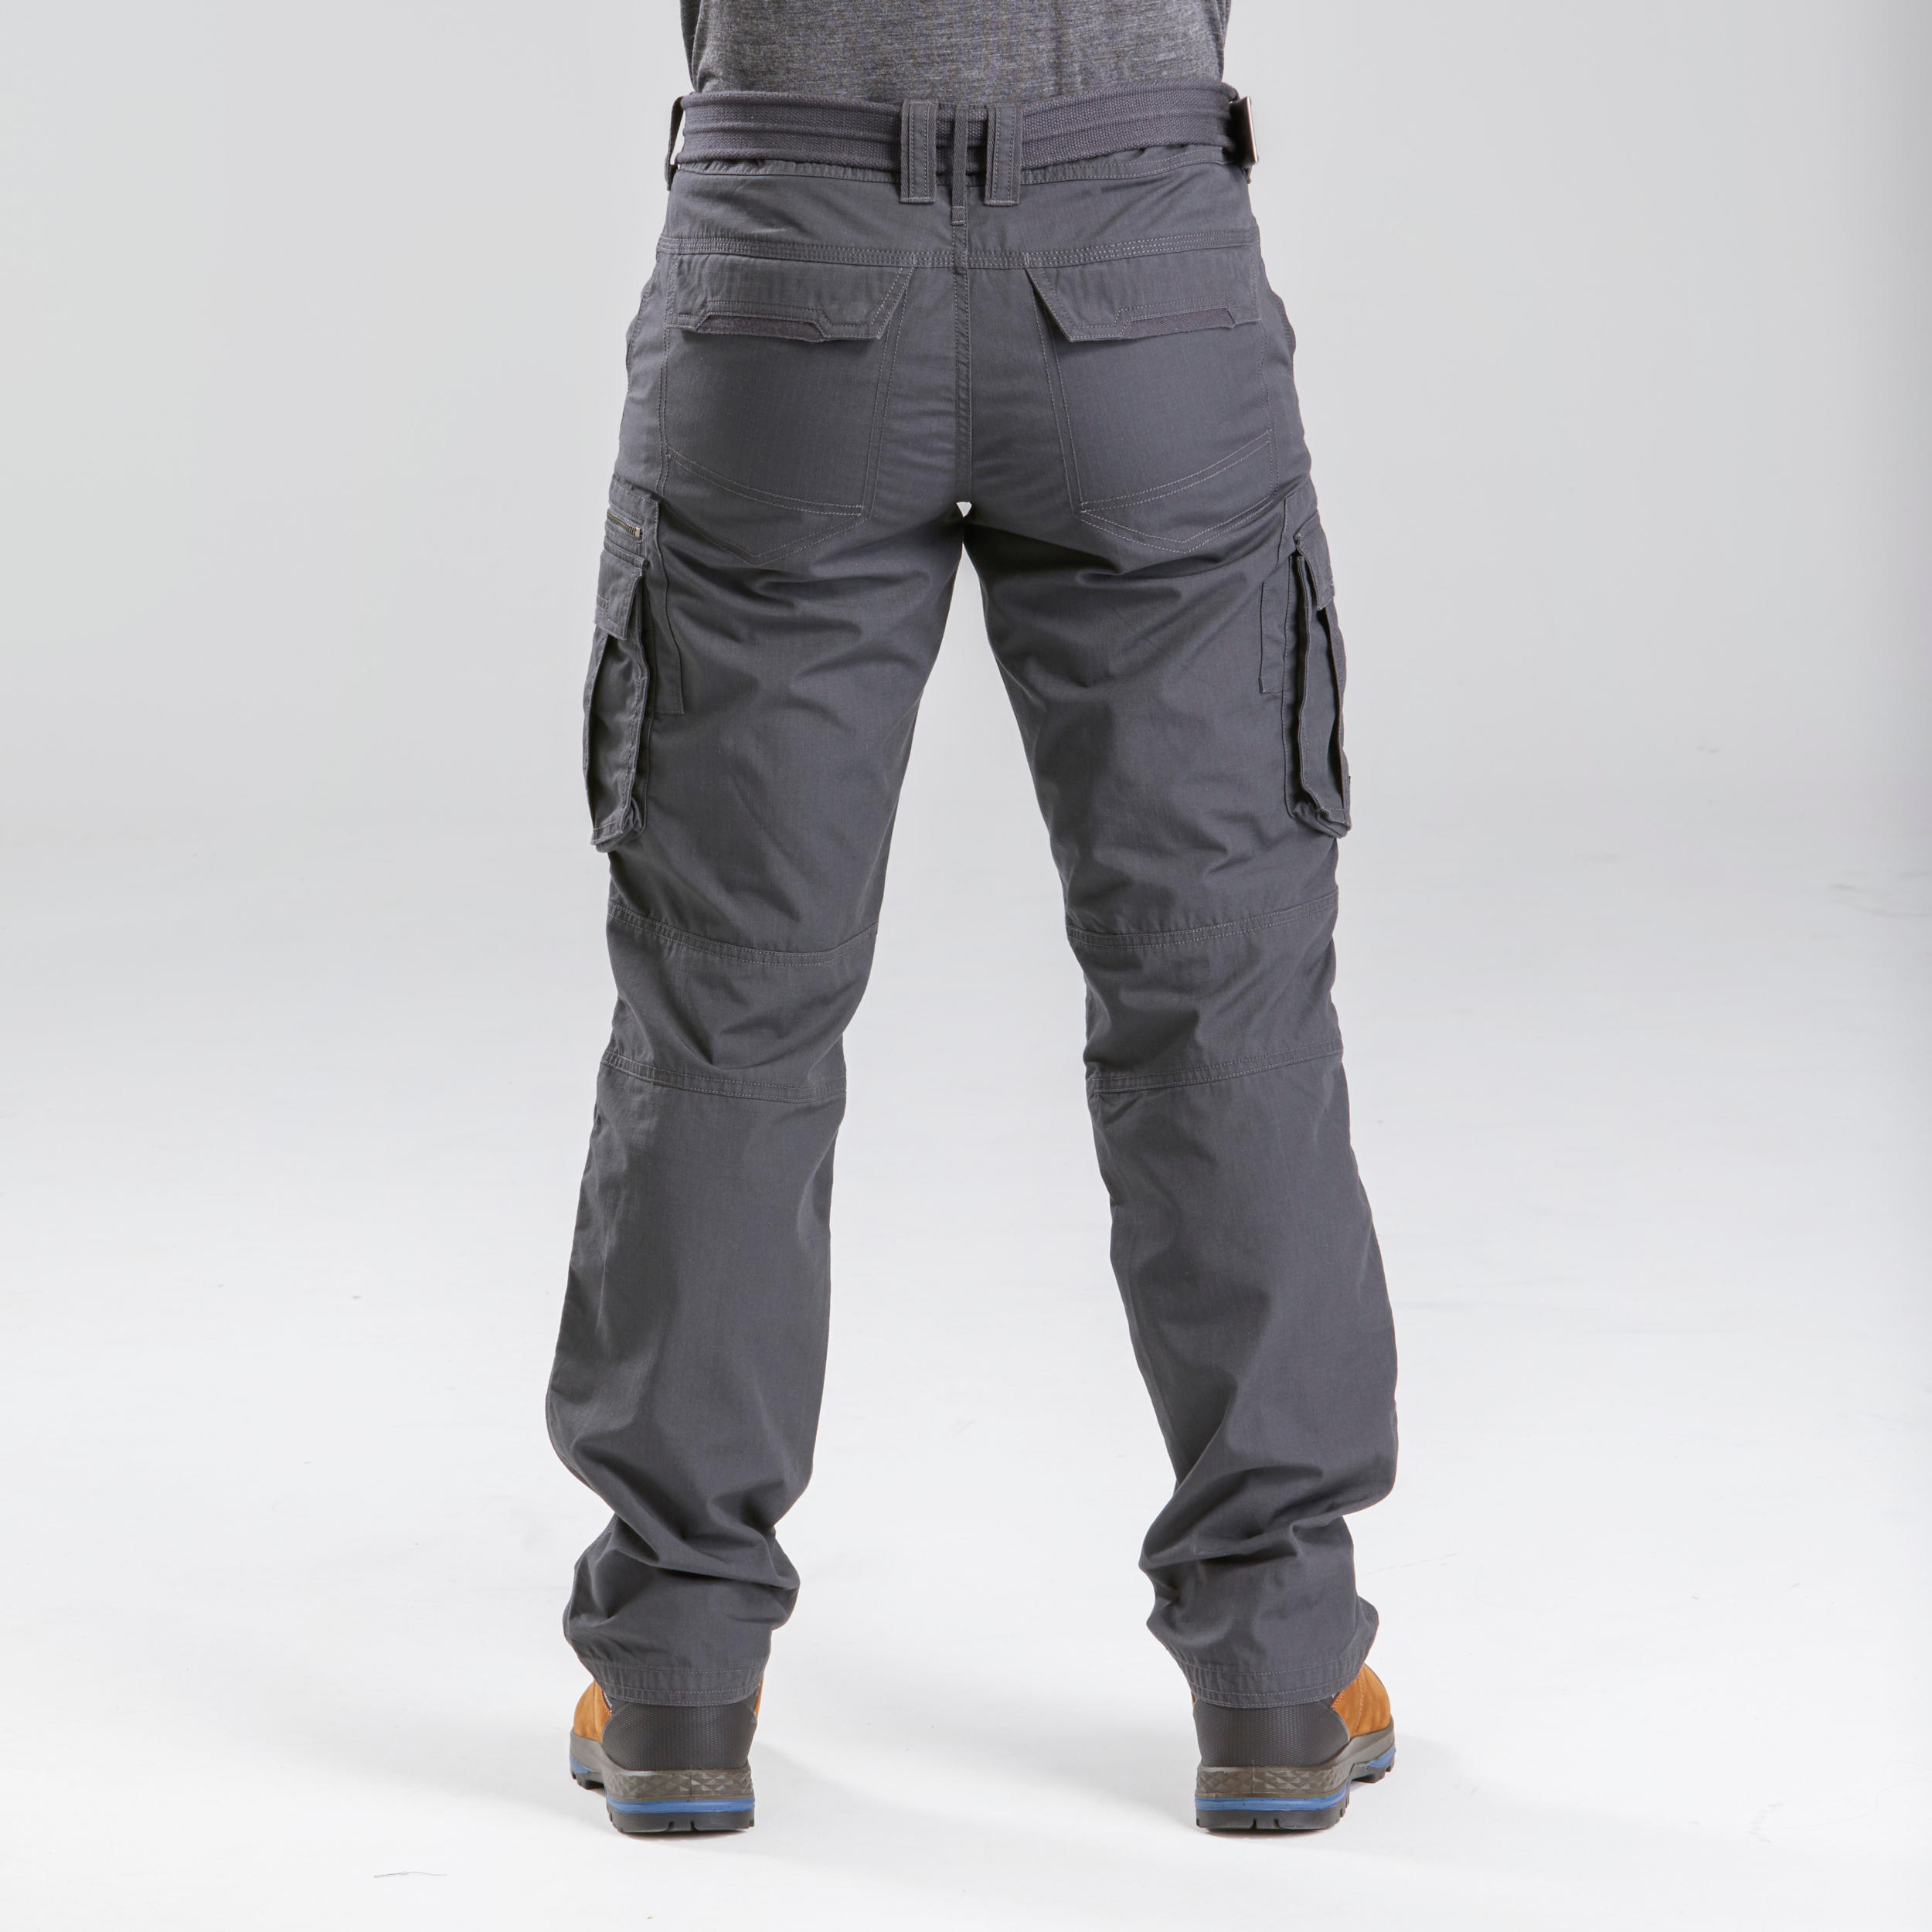 Men's Travel Trekking Cargo Trousers - TRAVEL 100 Grey 5/11